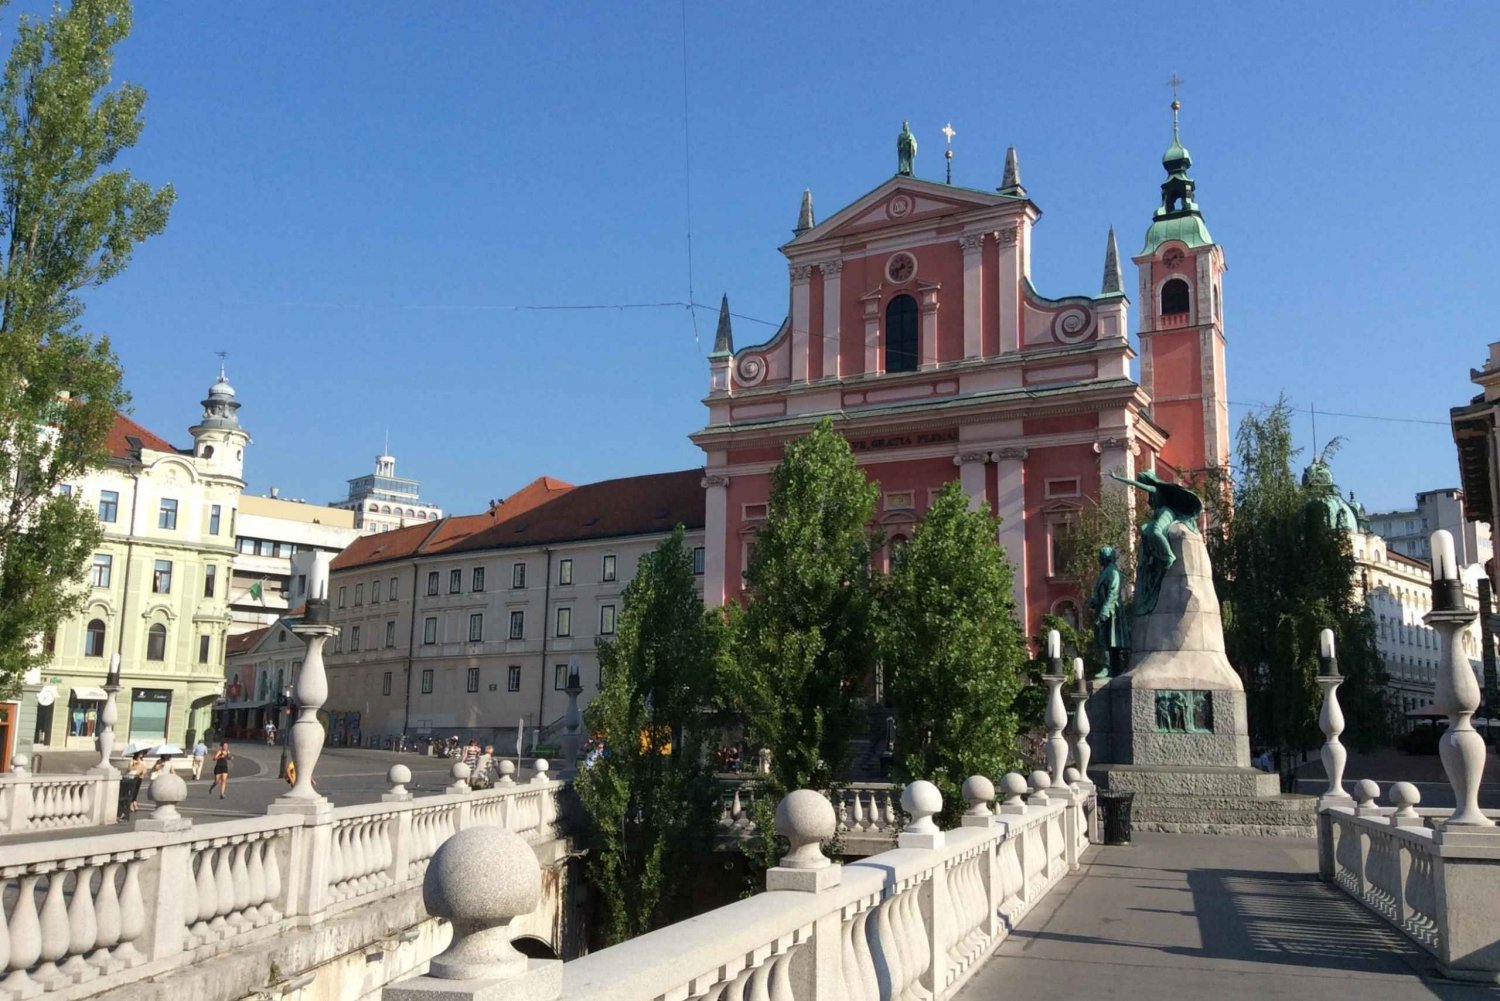 Z Koper: Ukryte skarby Lublany